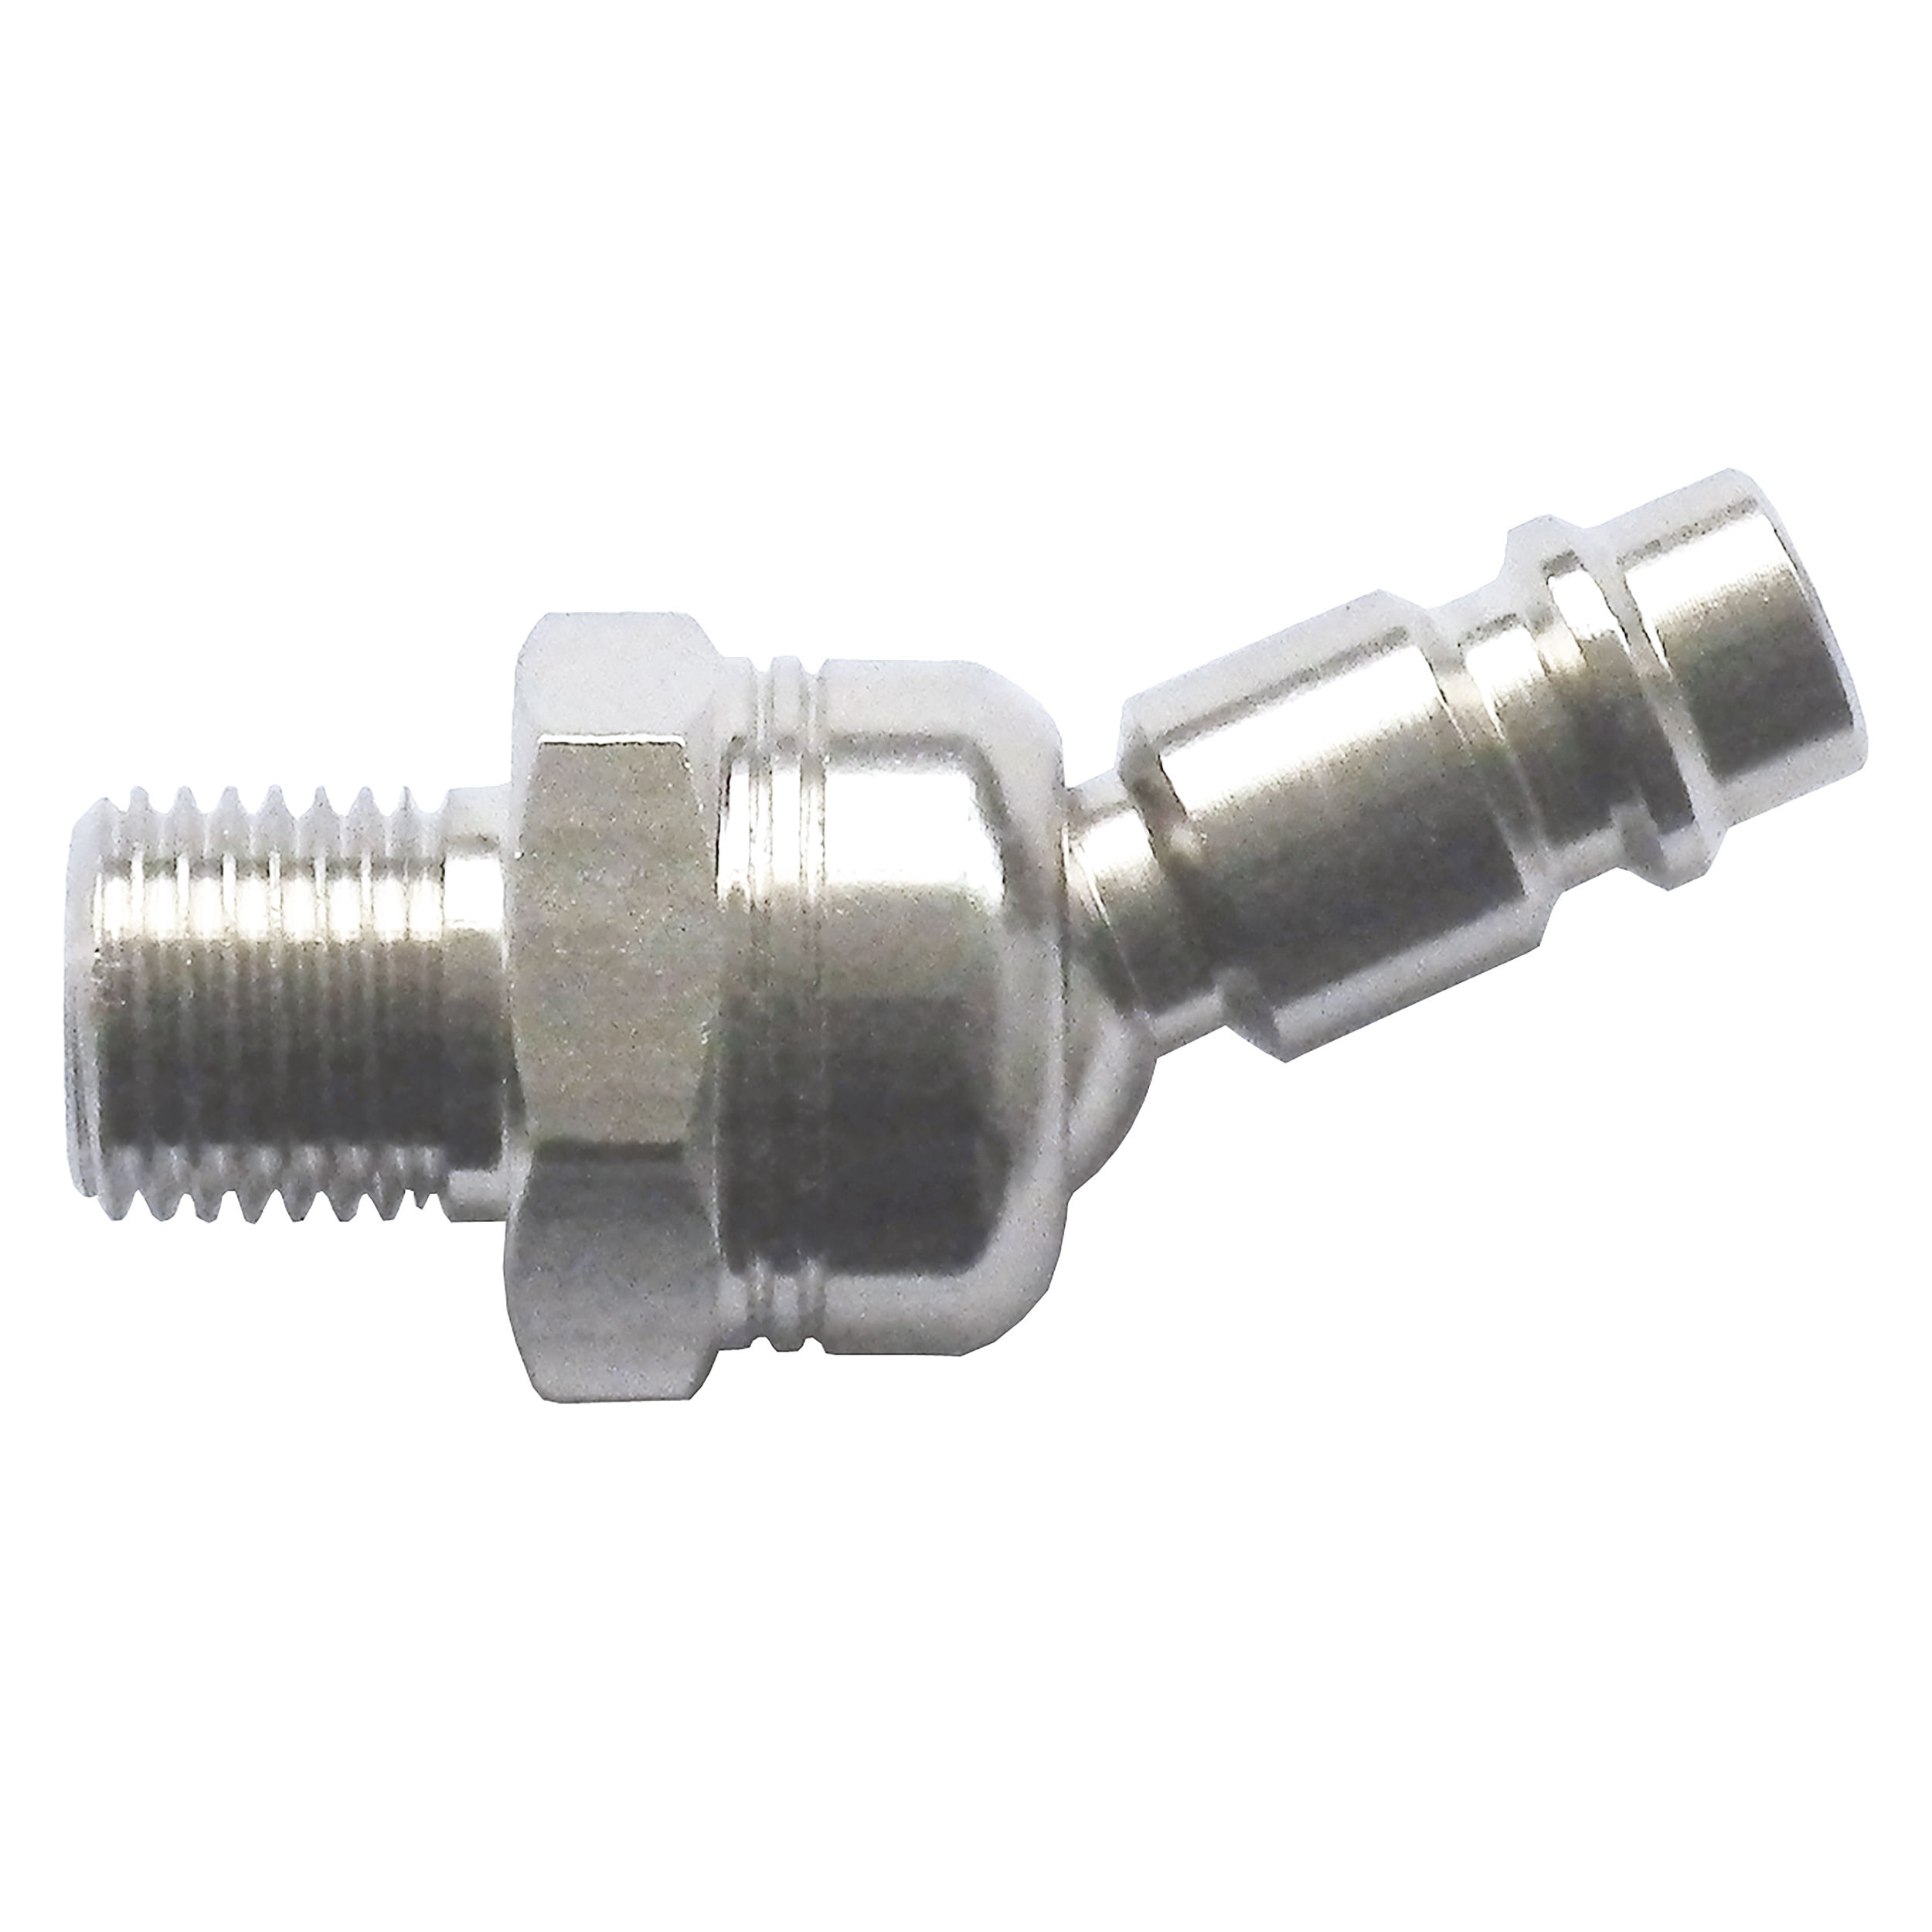 DN 7.2 swivel joint connector, male thread